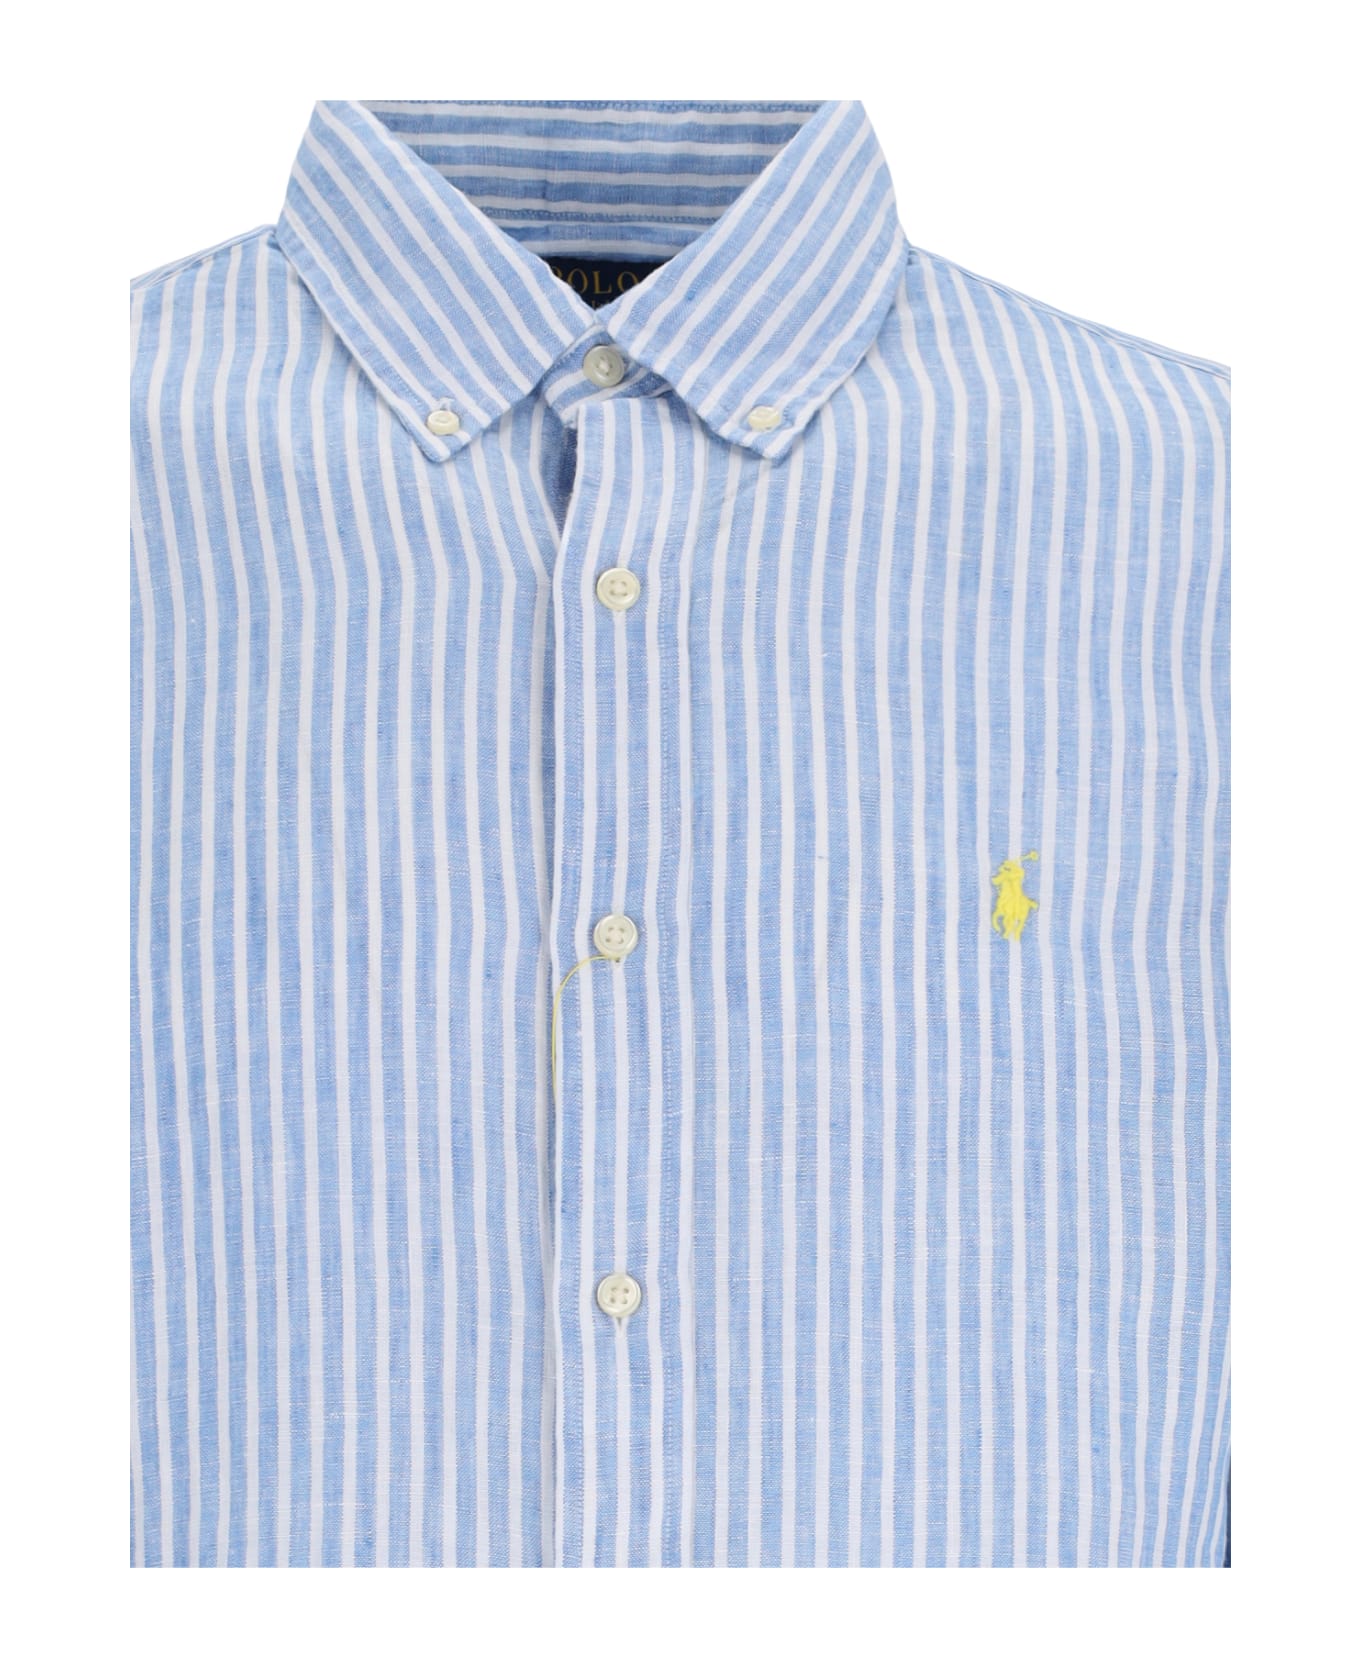 Polo Ralph Lauren Logo Shirt - BLUEWHITE